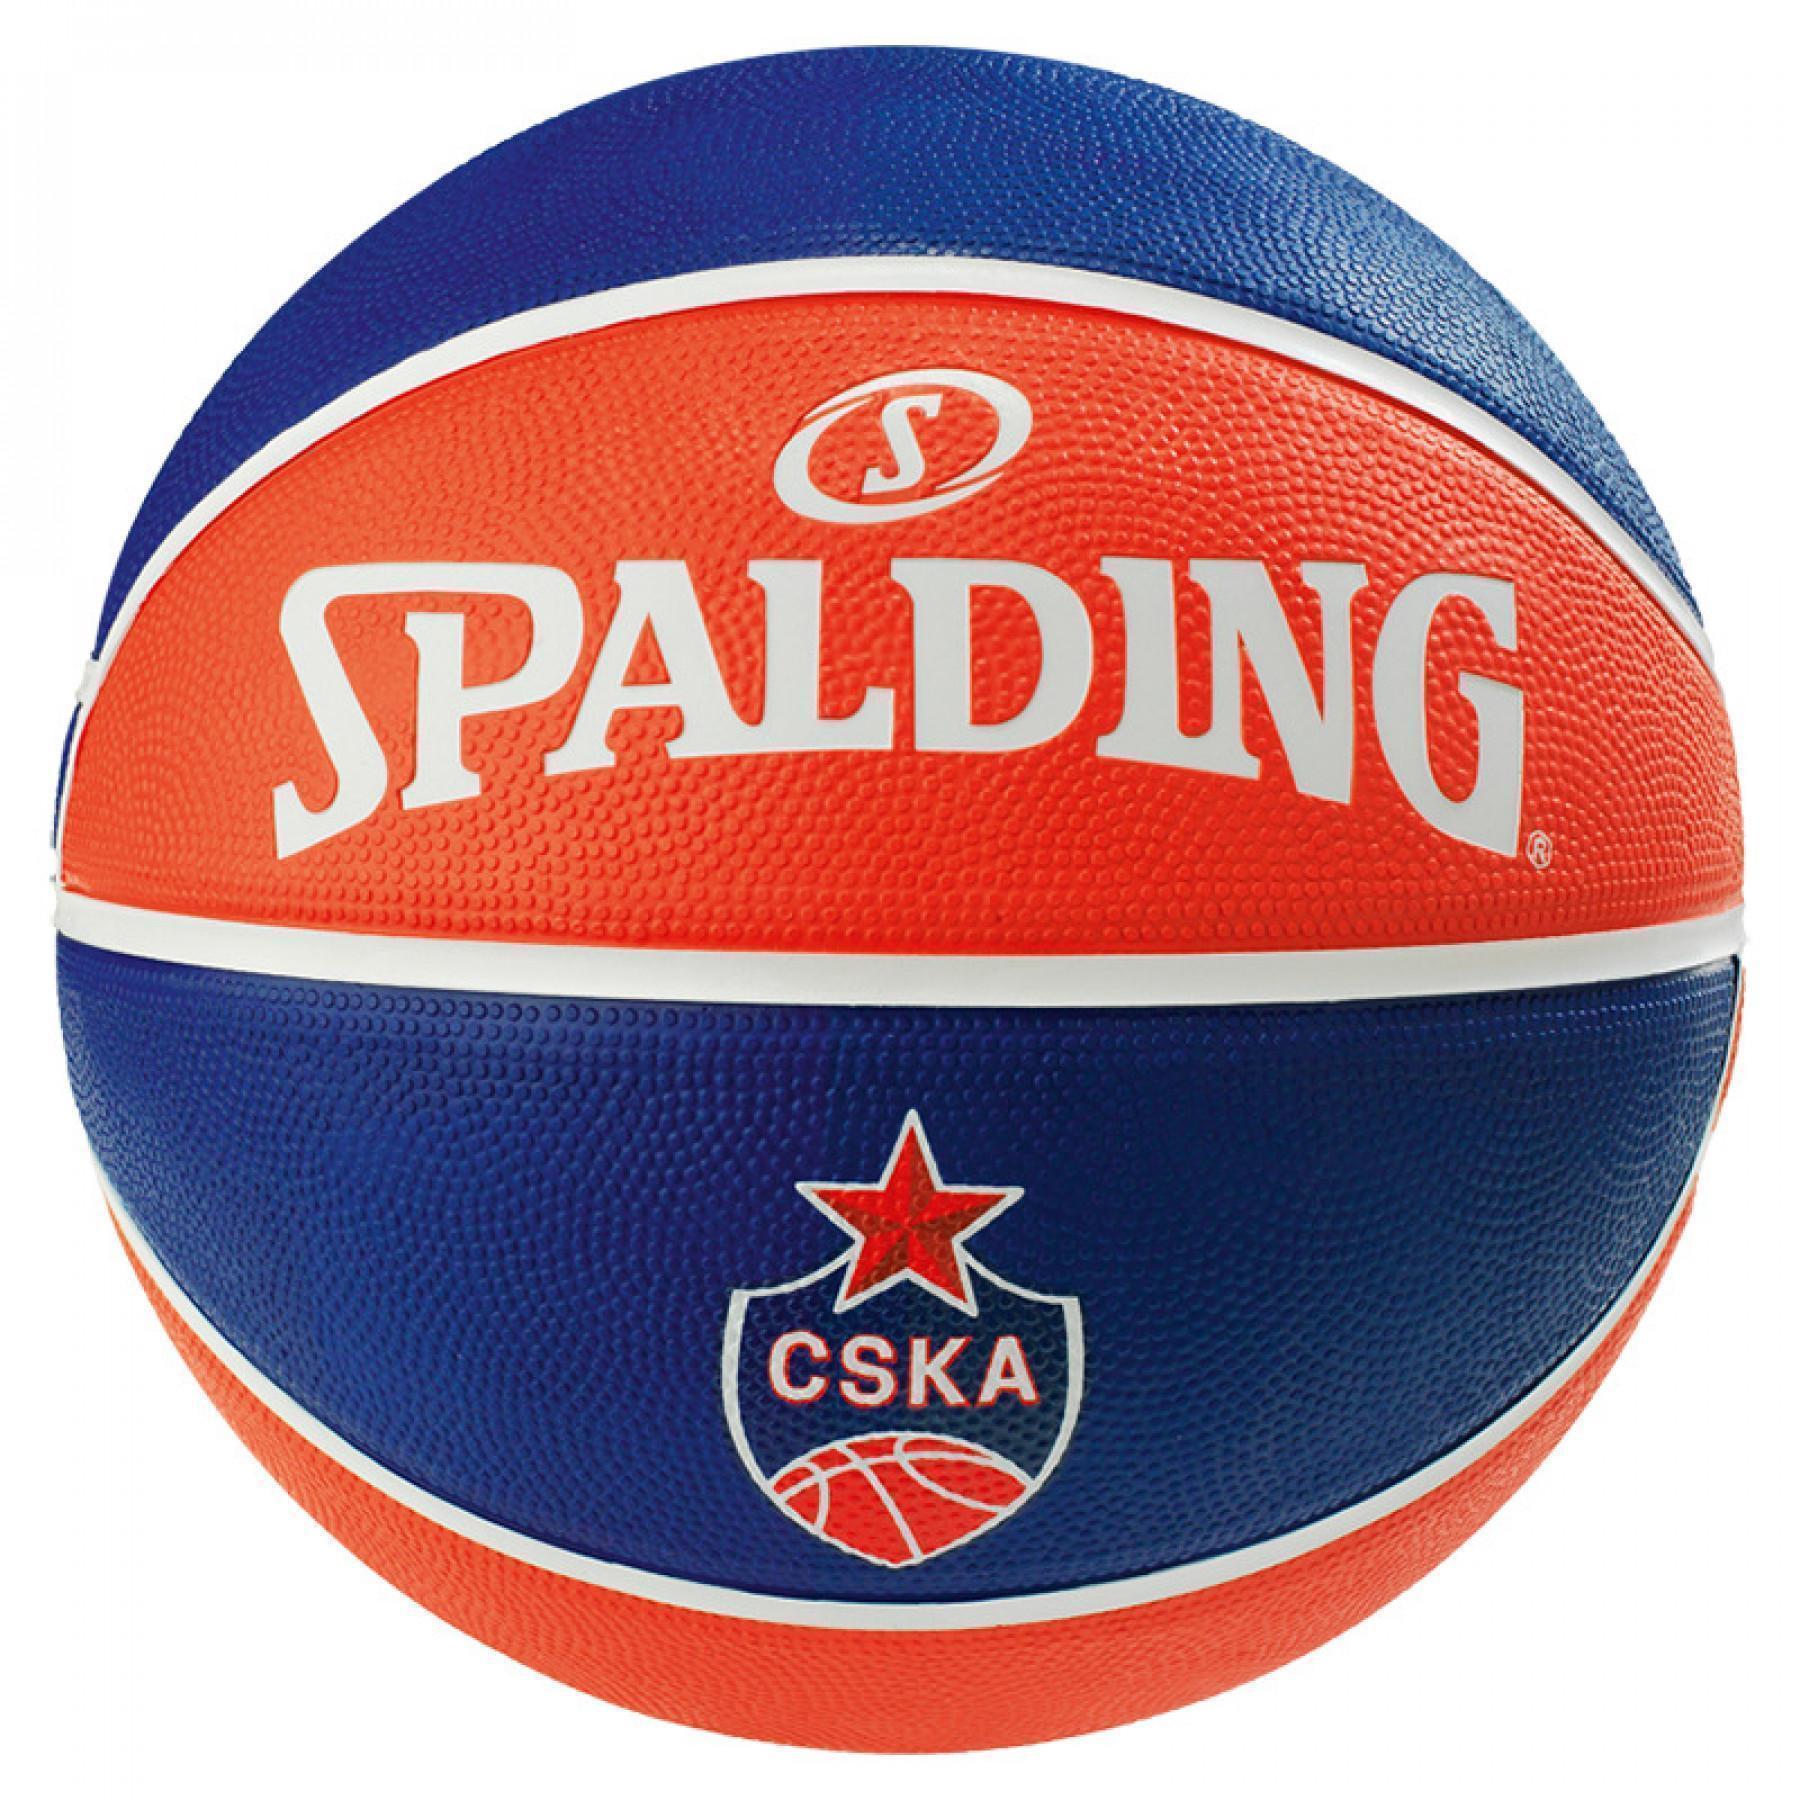 Balão Spalding EL Team Cska Moscow (83-779z)